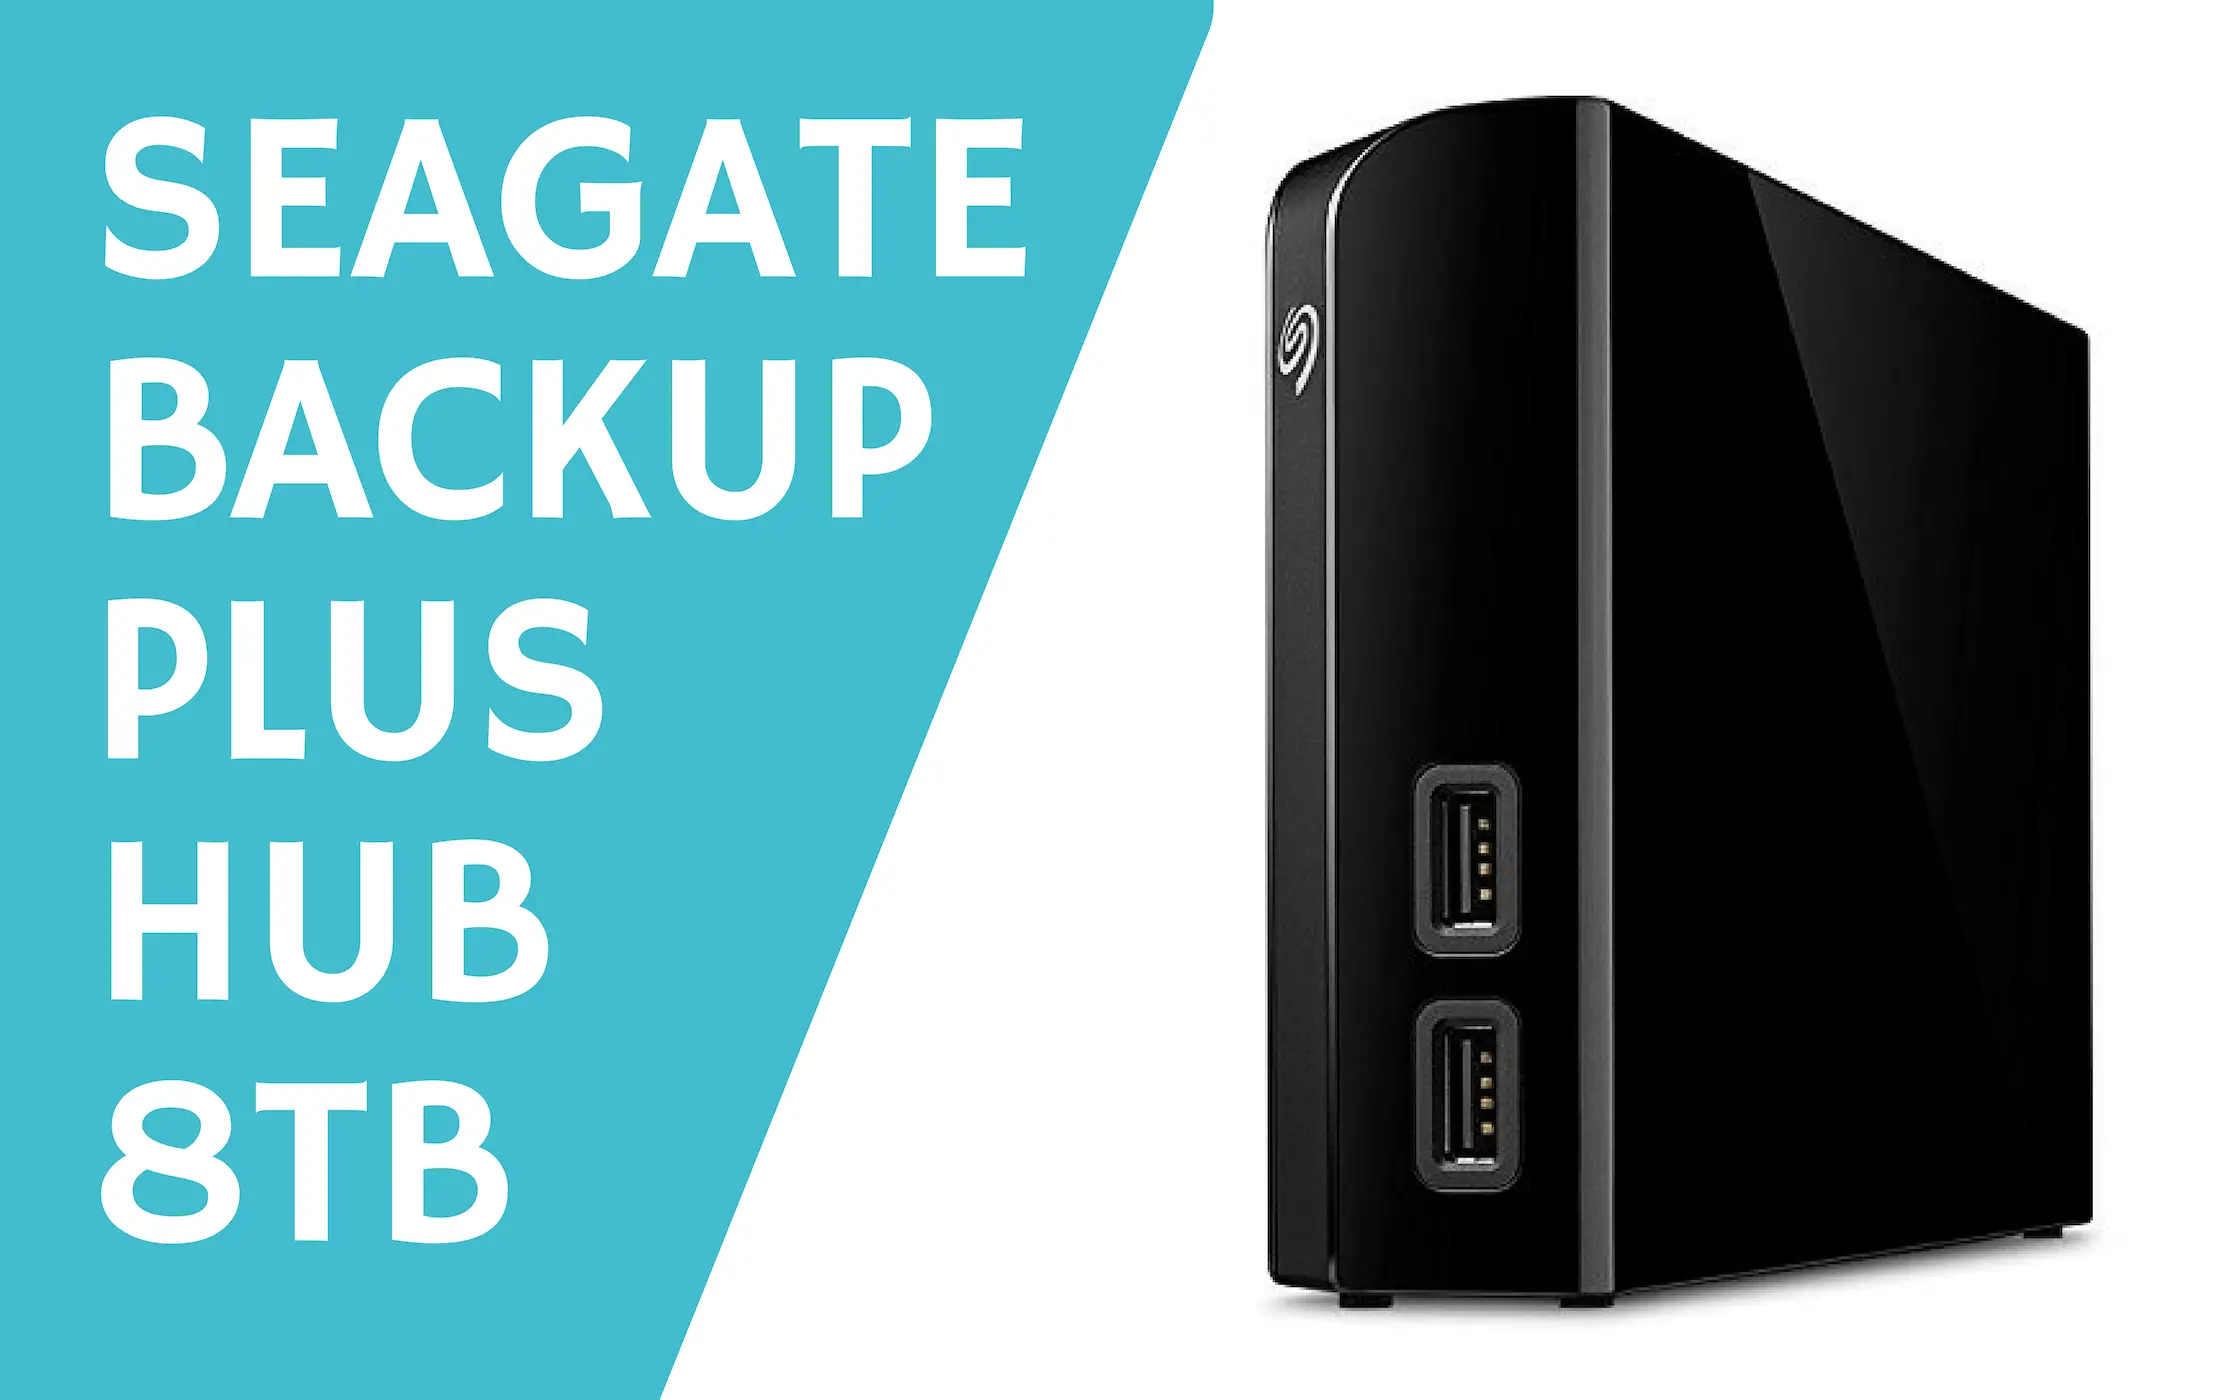 Seagate Backup Plus Hub 6 To (USB 3.0)